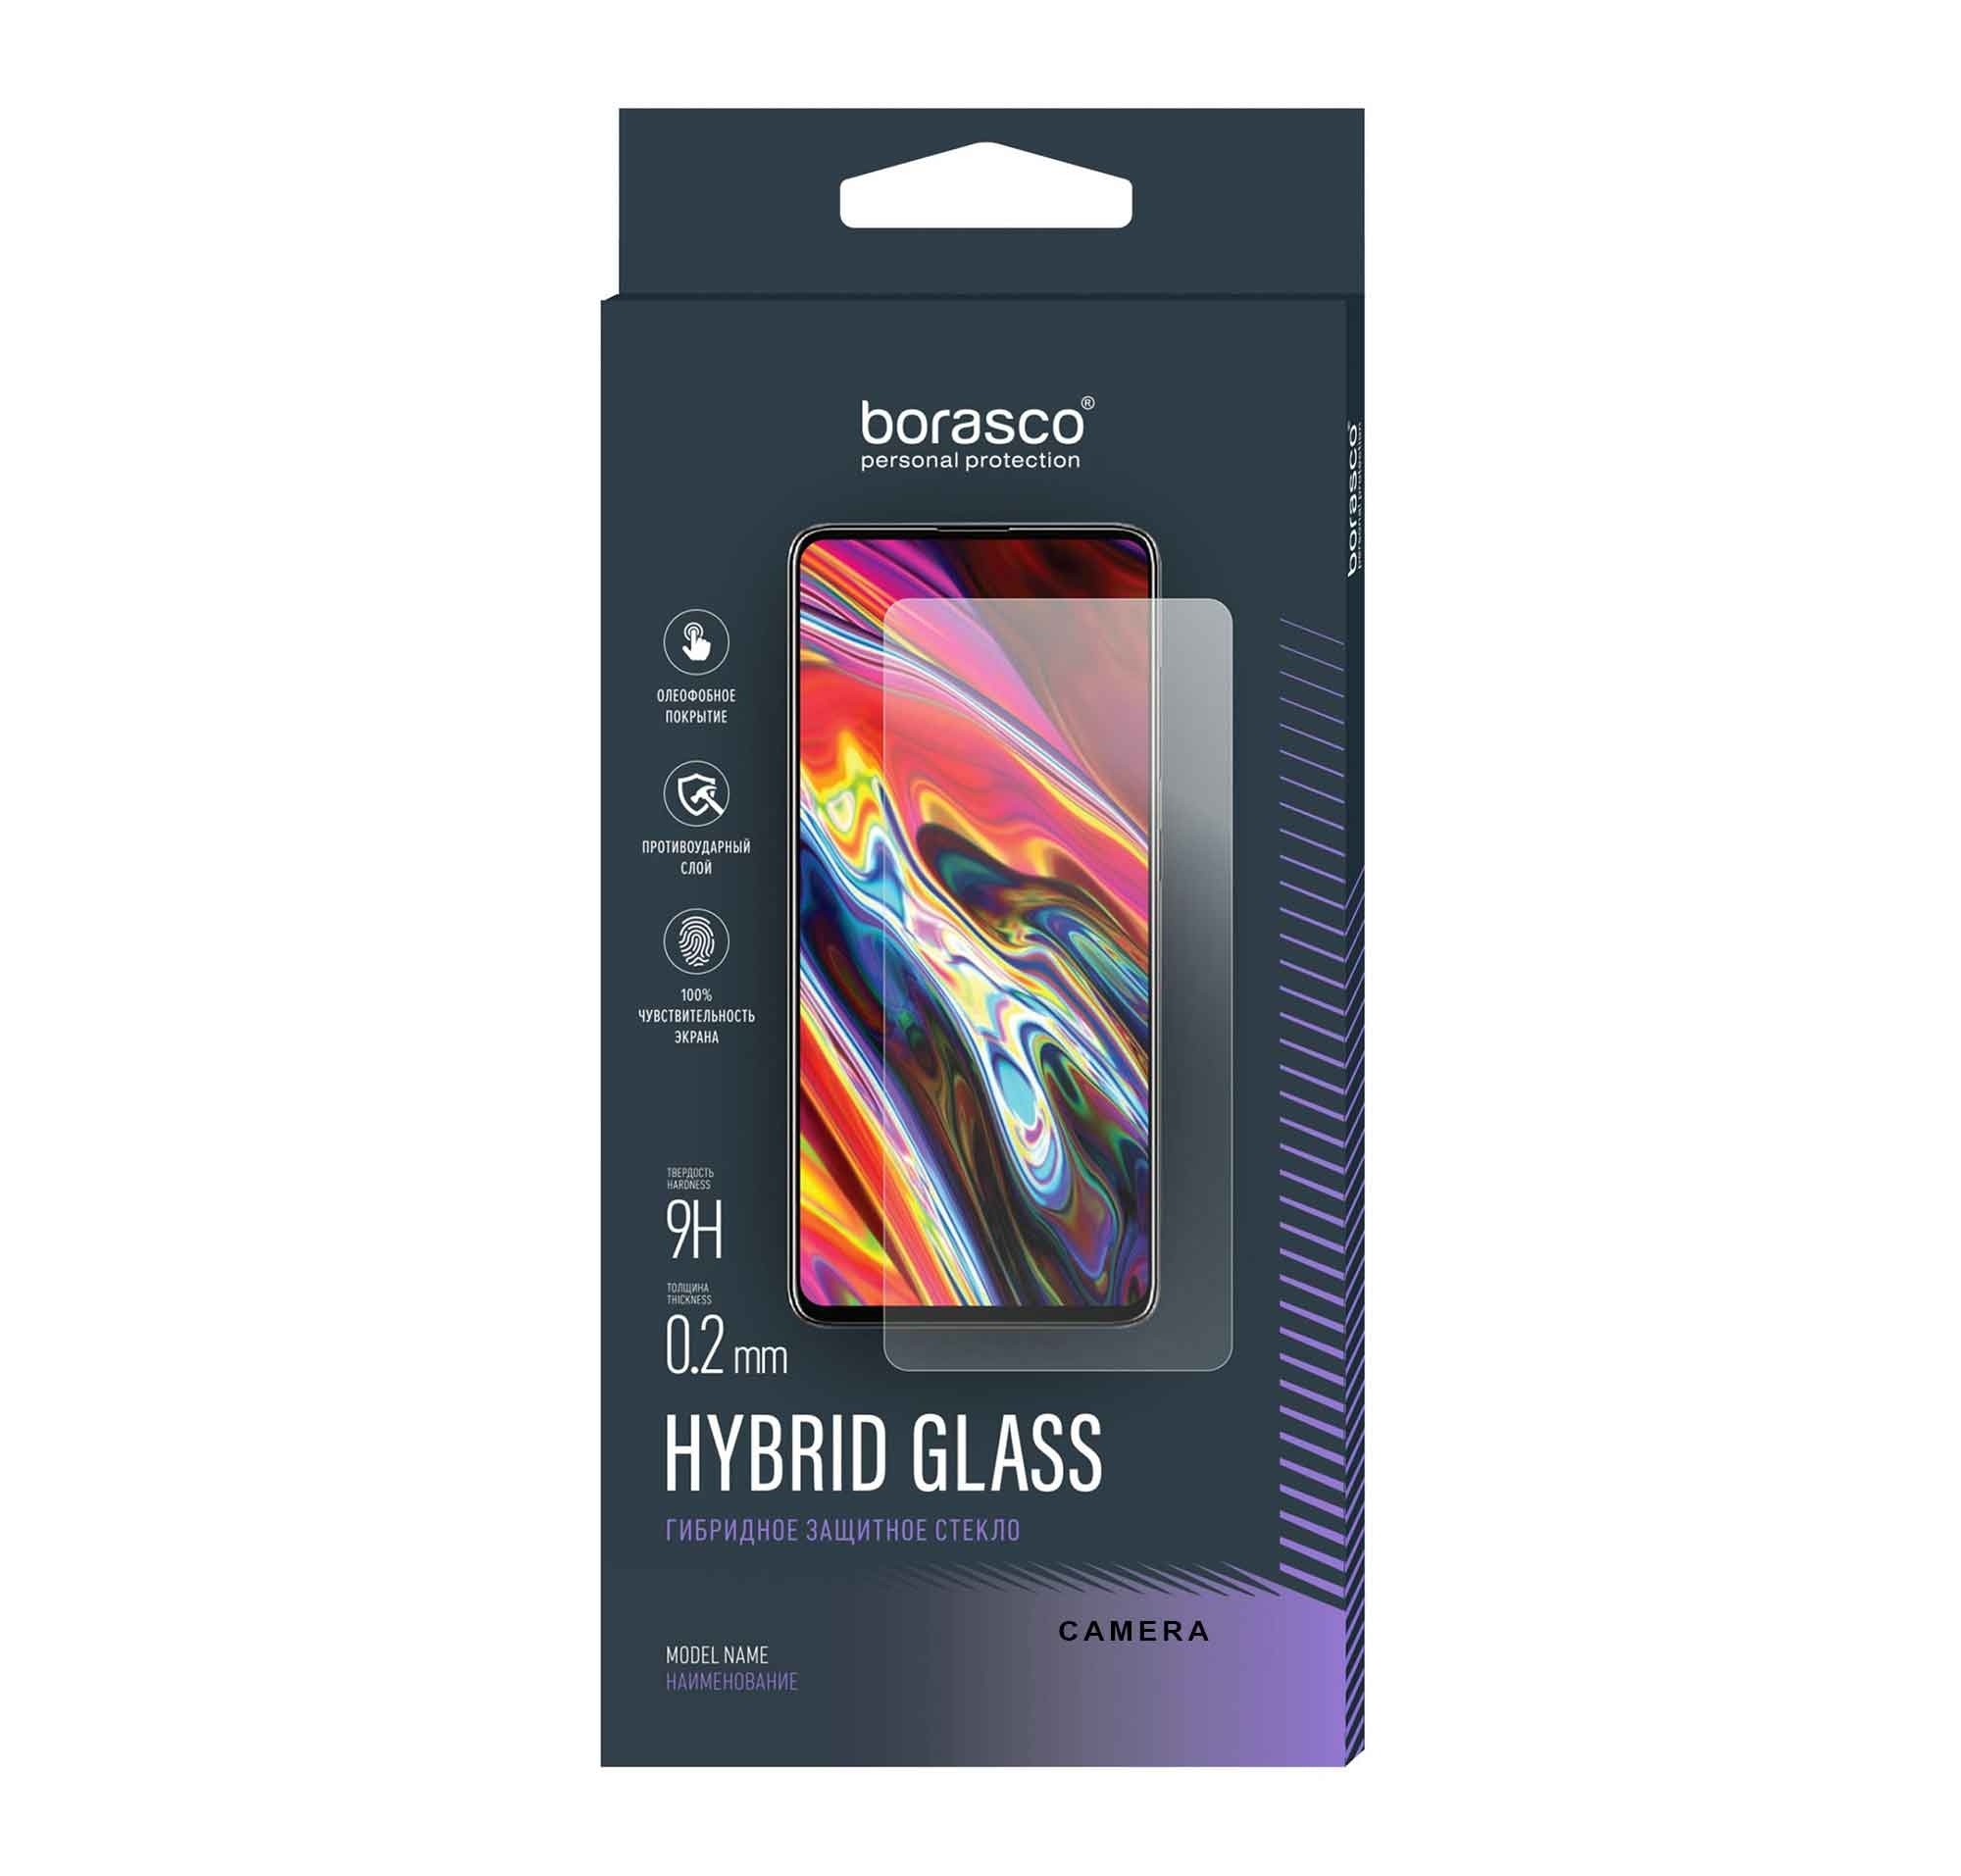 Защитное стекло (Экран+Камера) BoraSCO Hybrid Glass для ITEL Vision 3 Plus чехол mypads рогатый любитель поиграть для itel vision 3 plus itel p38 pro задняя панель накладка бампер